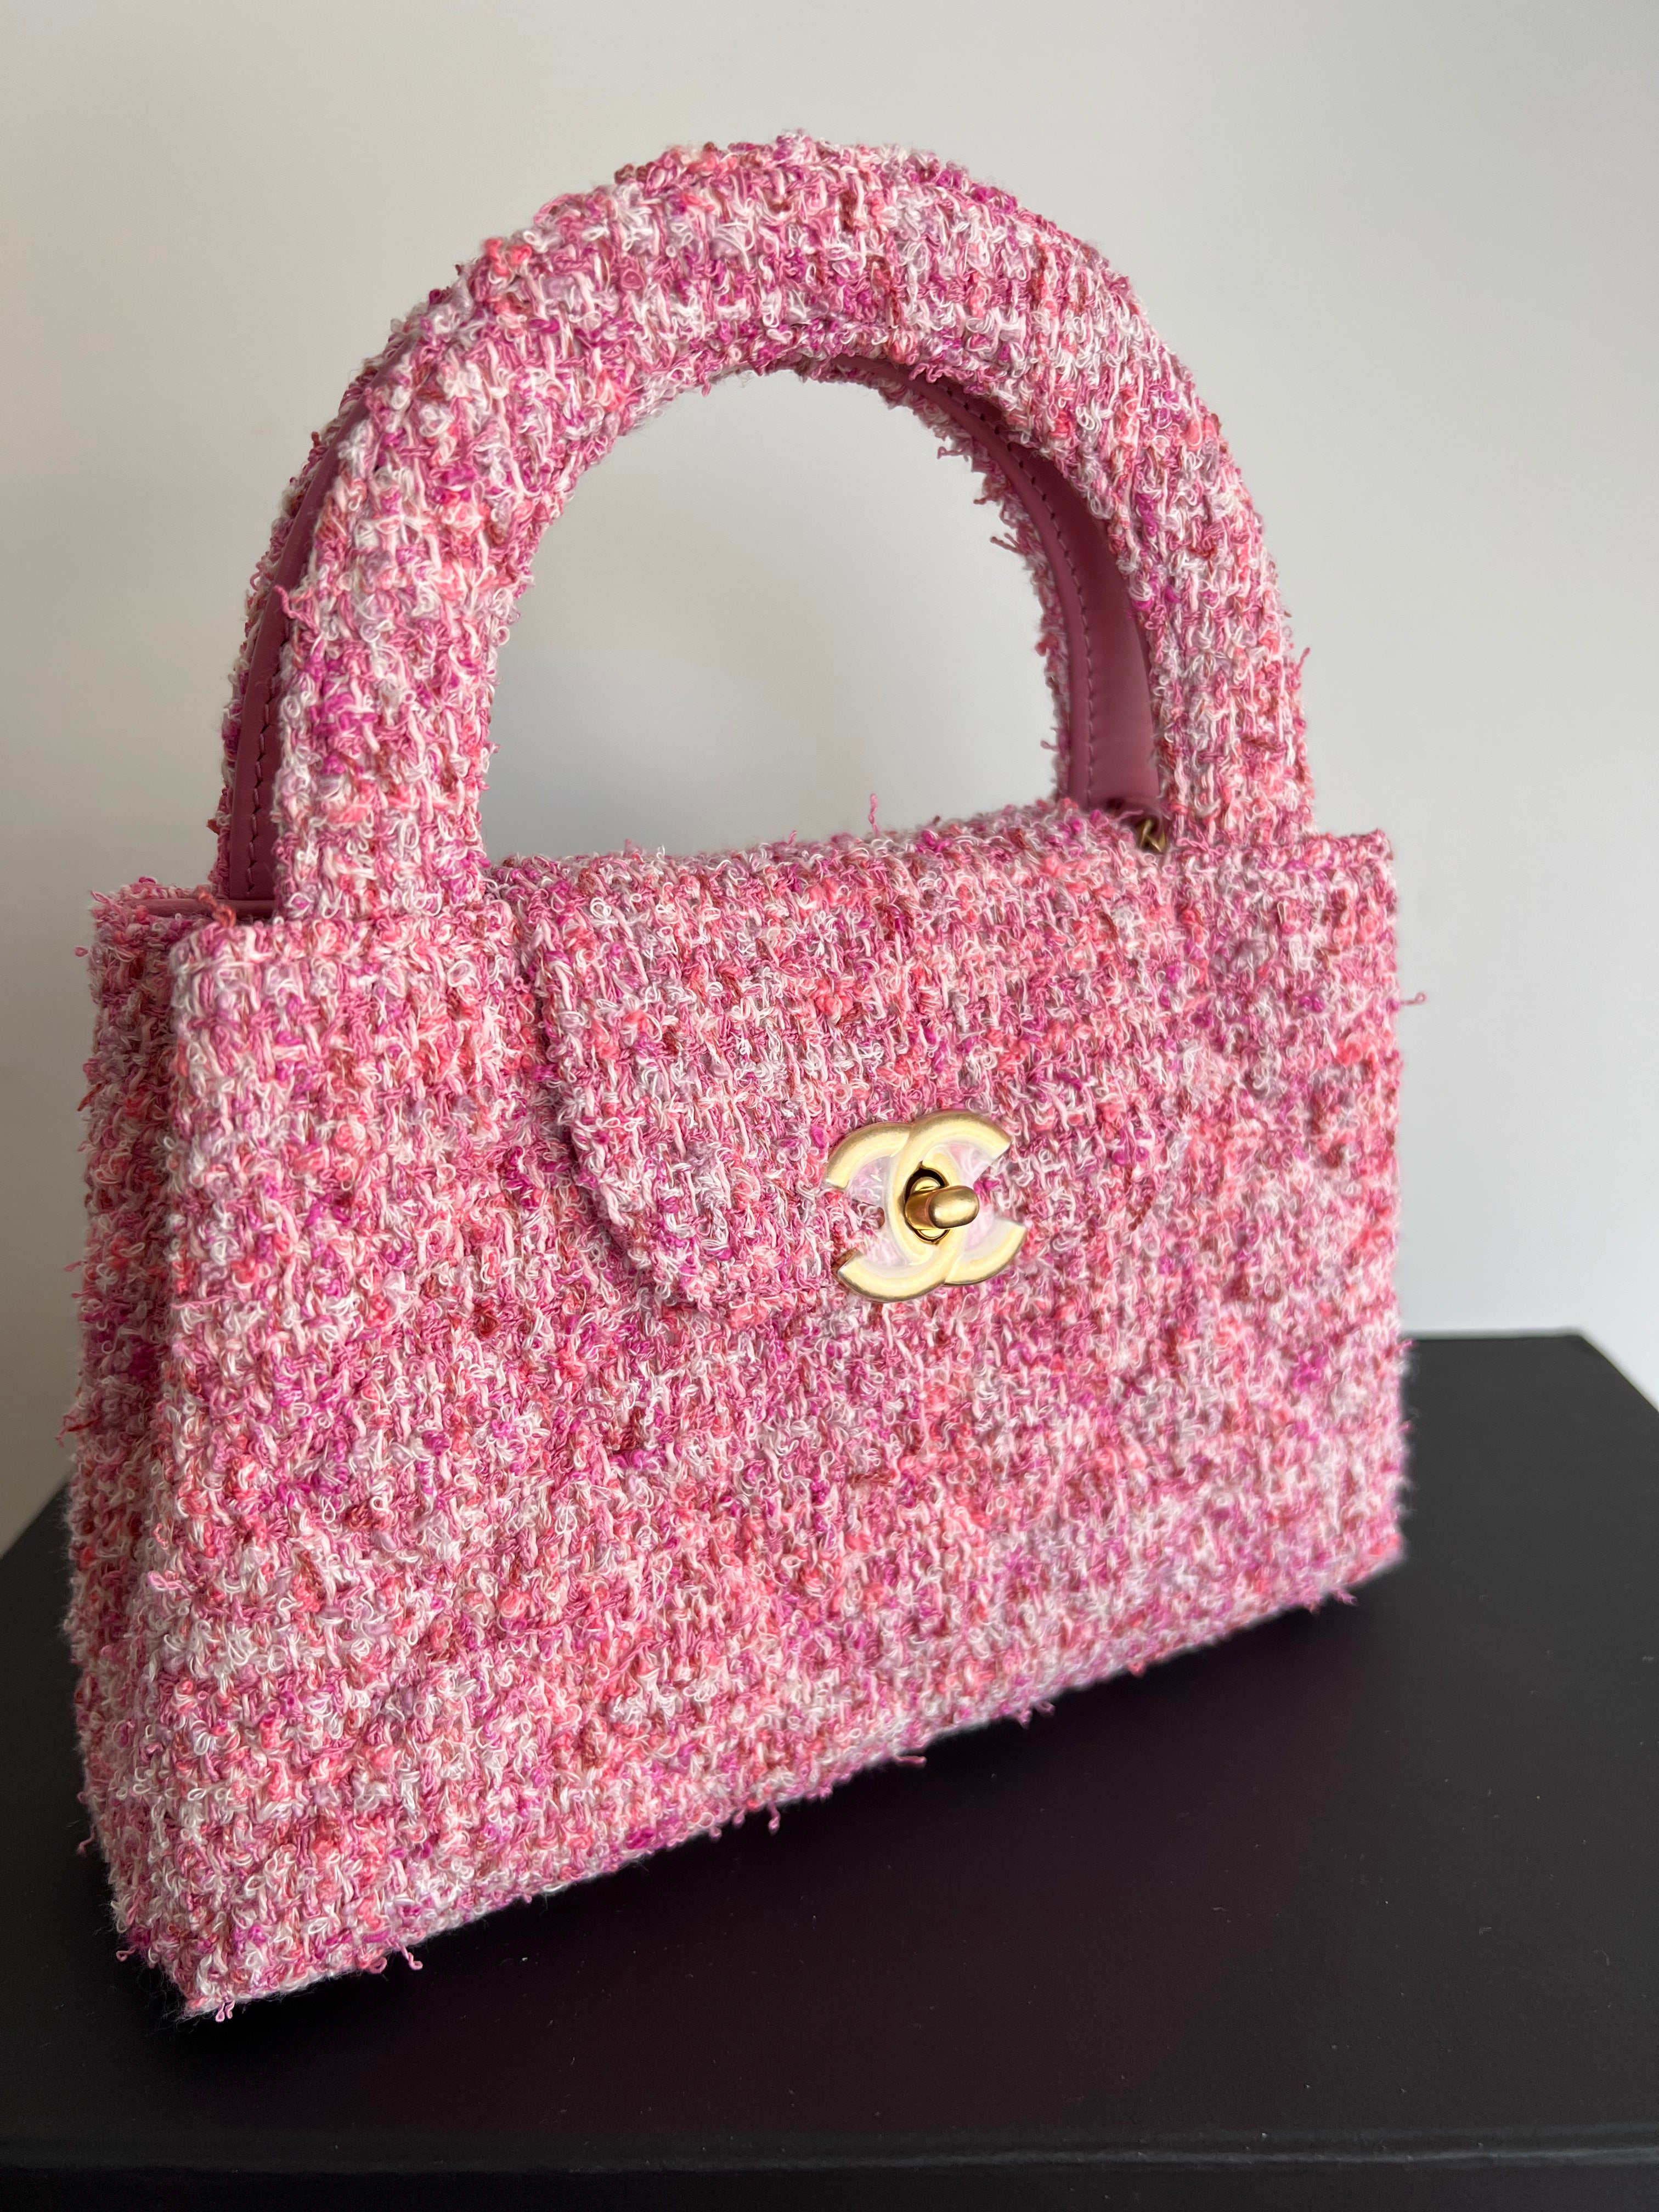 Chanel Kelly Shopping Bag Cotton Tweed Pink & Ecru (Mini)